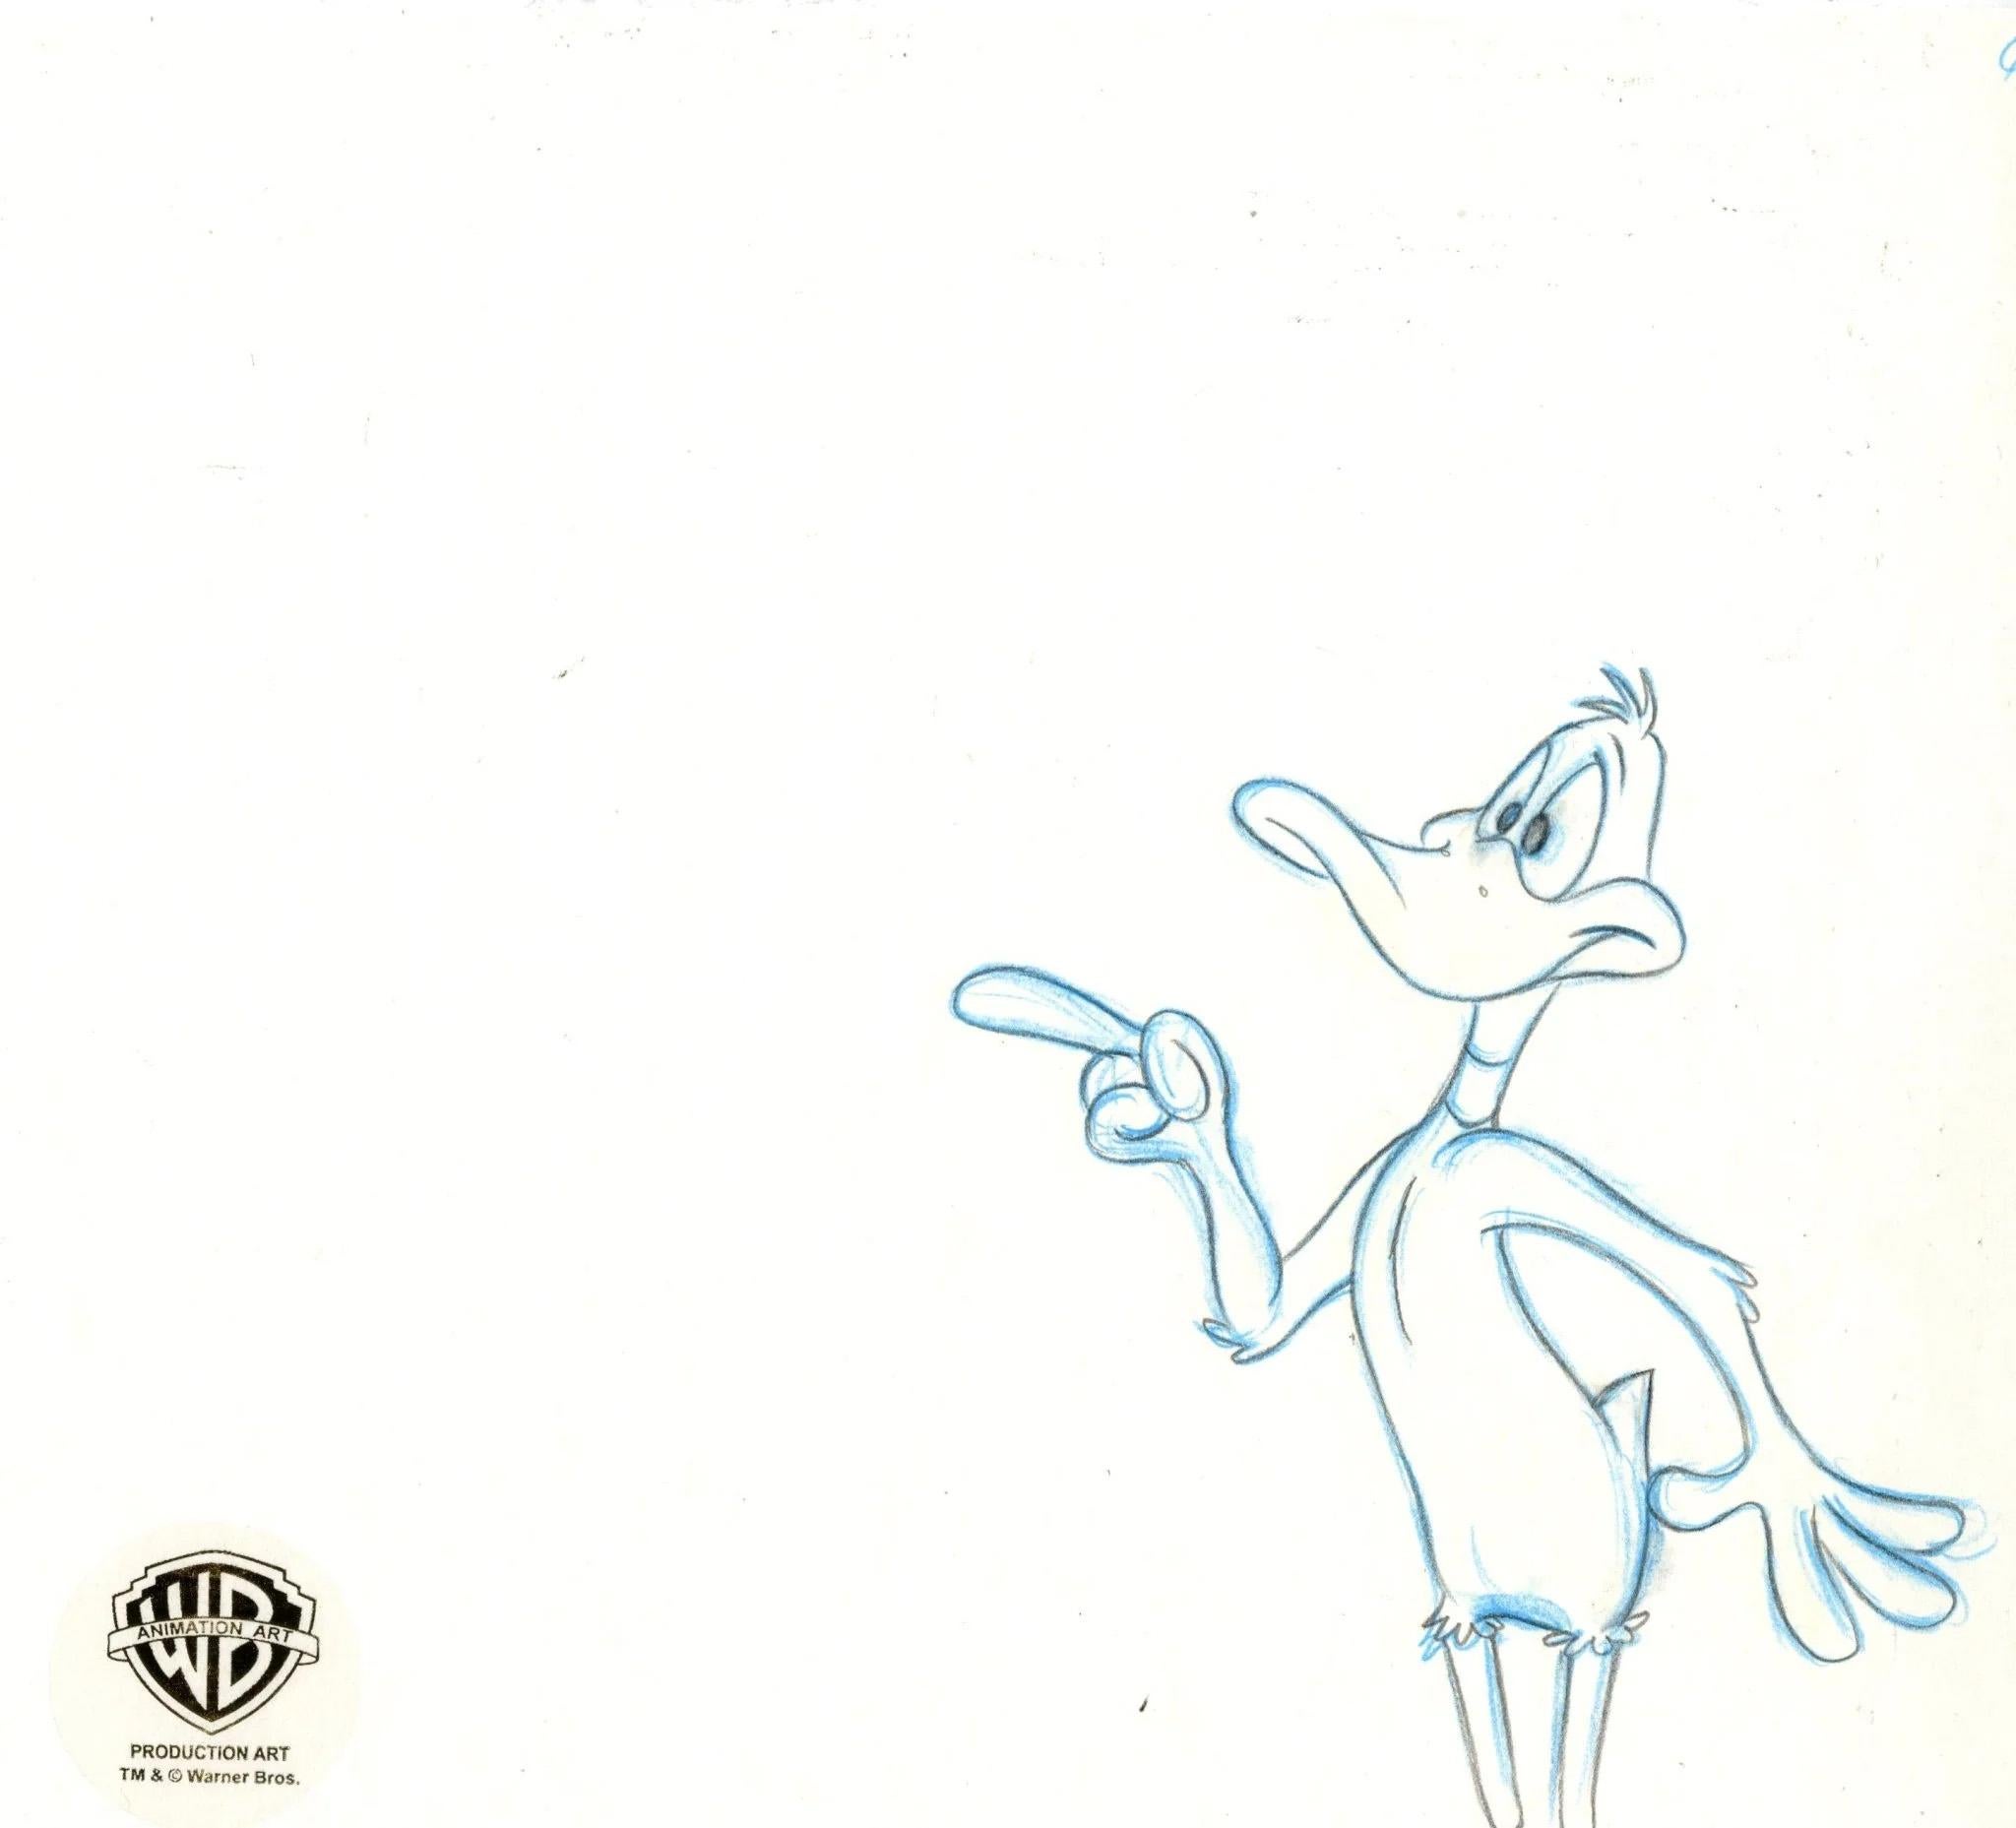 Looney Tunes - Dessin de production d'origine : Daffy Duck - Art de Looney Tunes Studio Artists